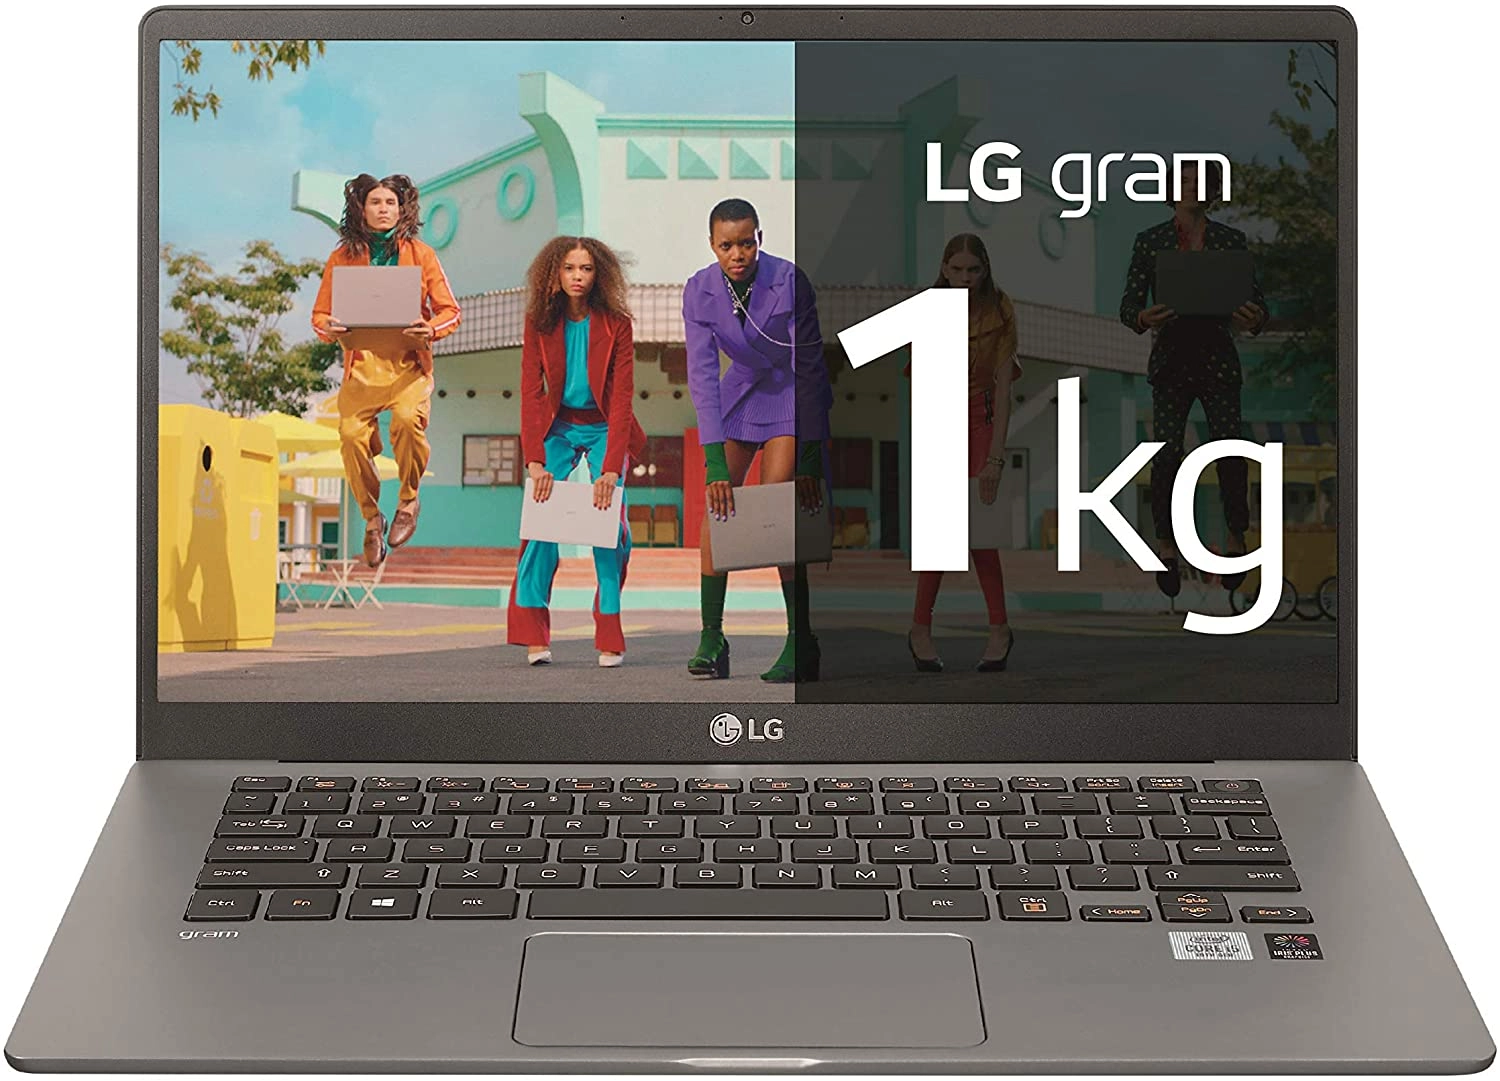 LG 14Z90N-V-AA78B laptop image